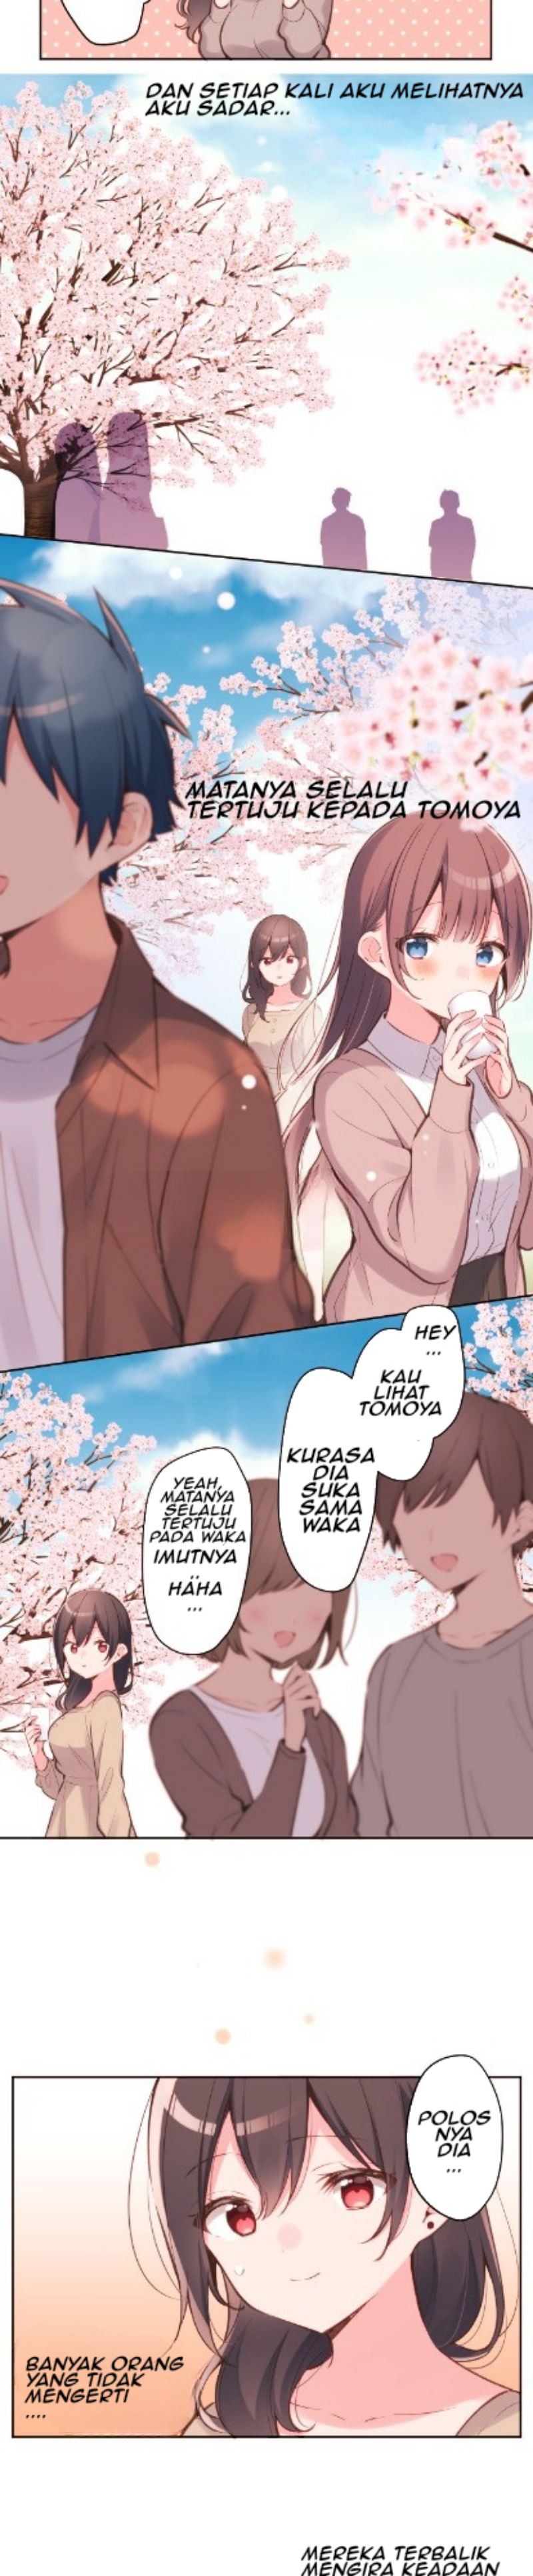 Waka-chan Is Flirty Again Chapter 35